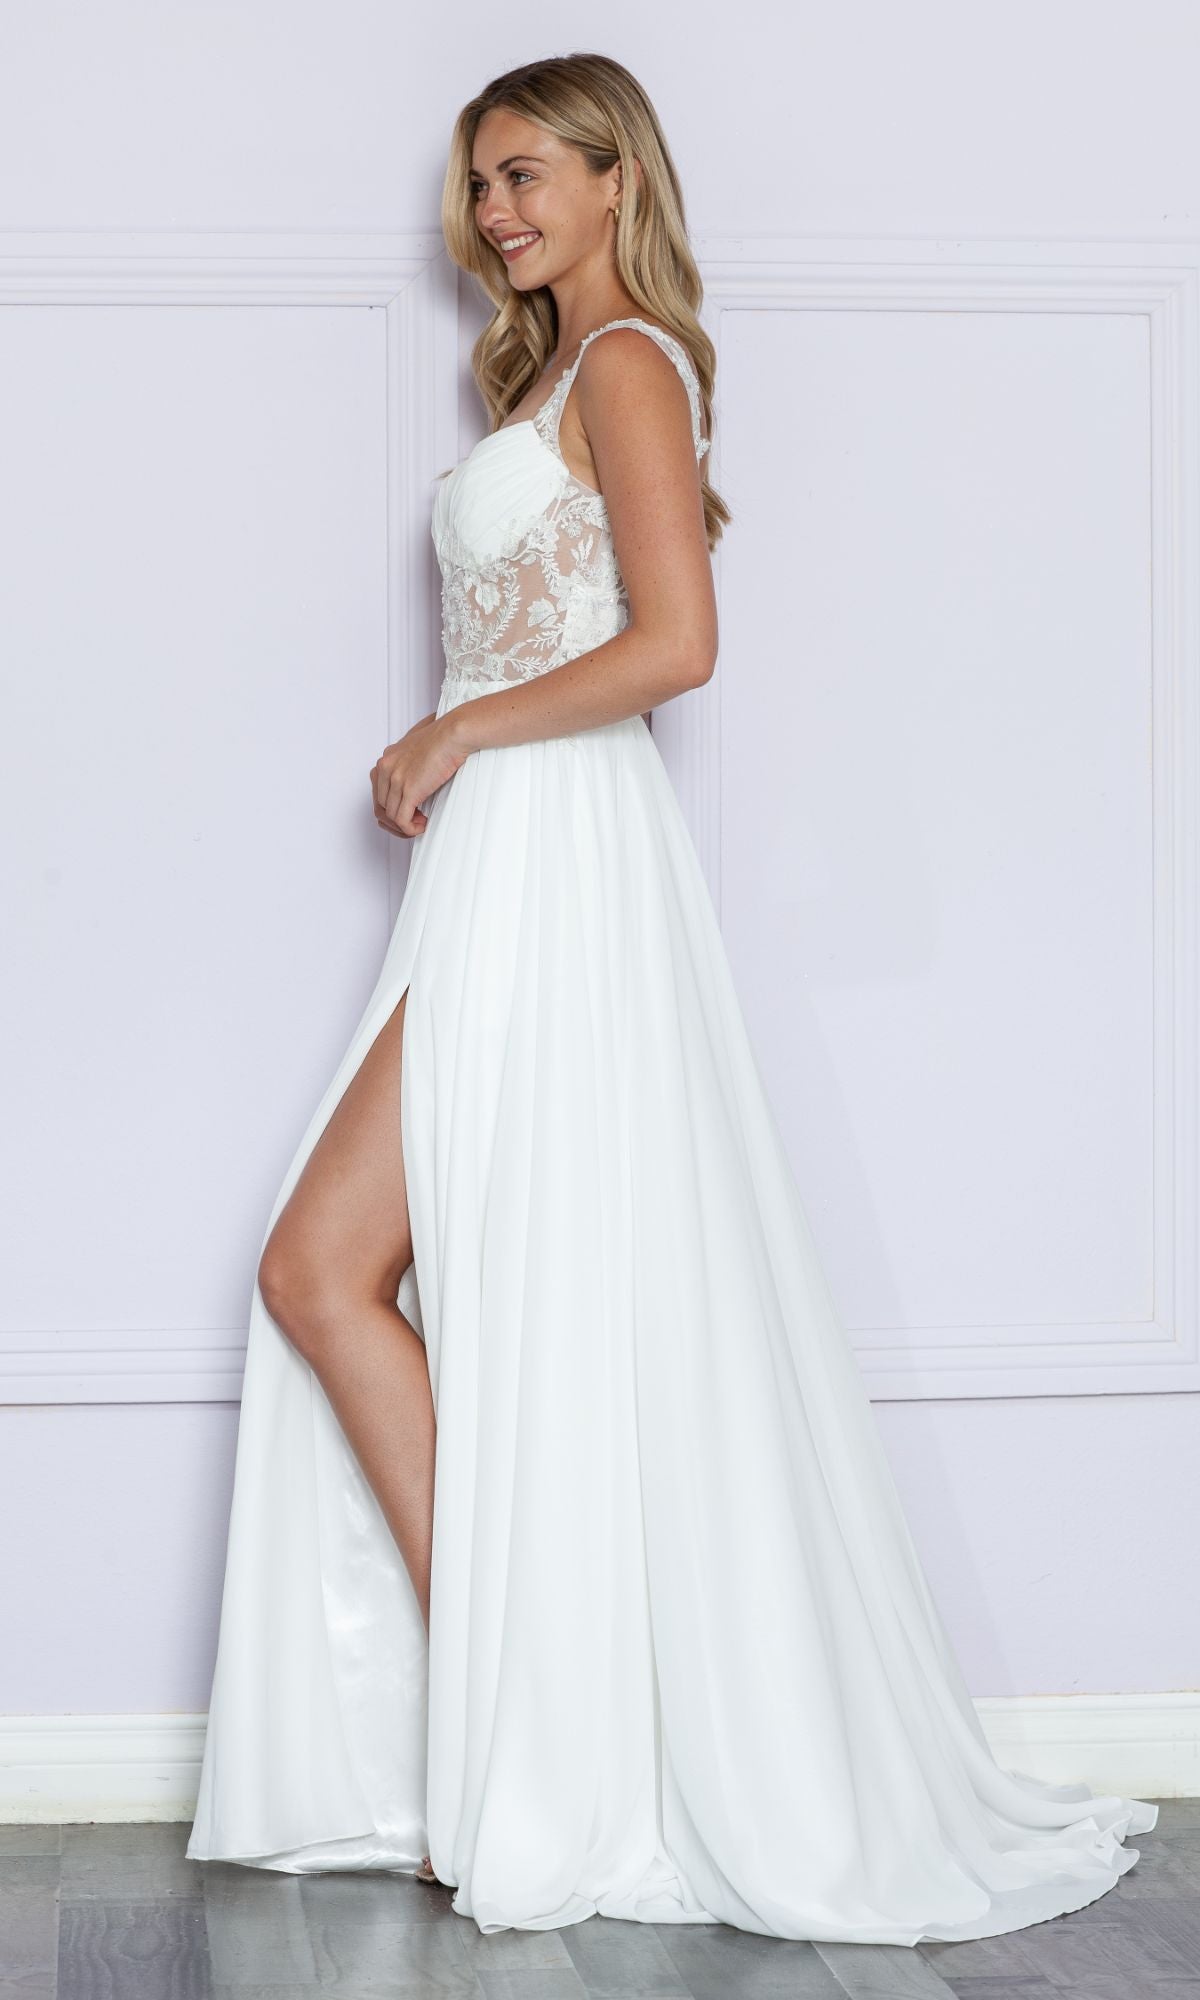 Sheer-Lace Bodice Long White Formal Dress 9376